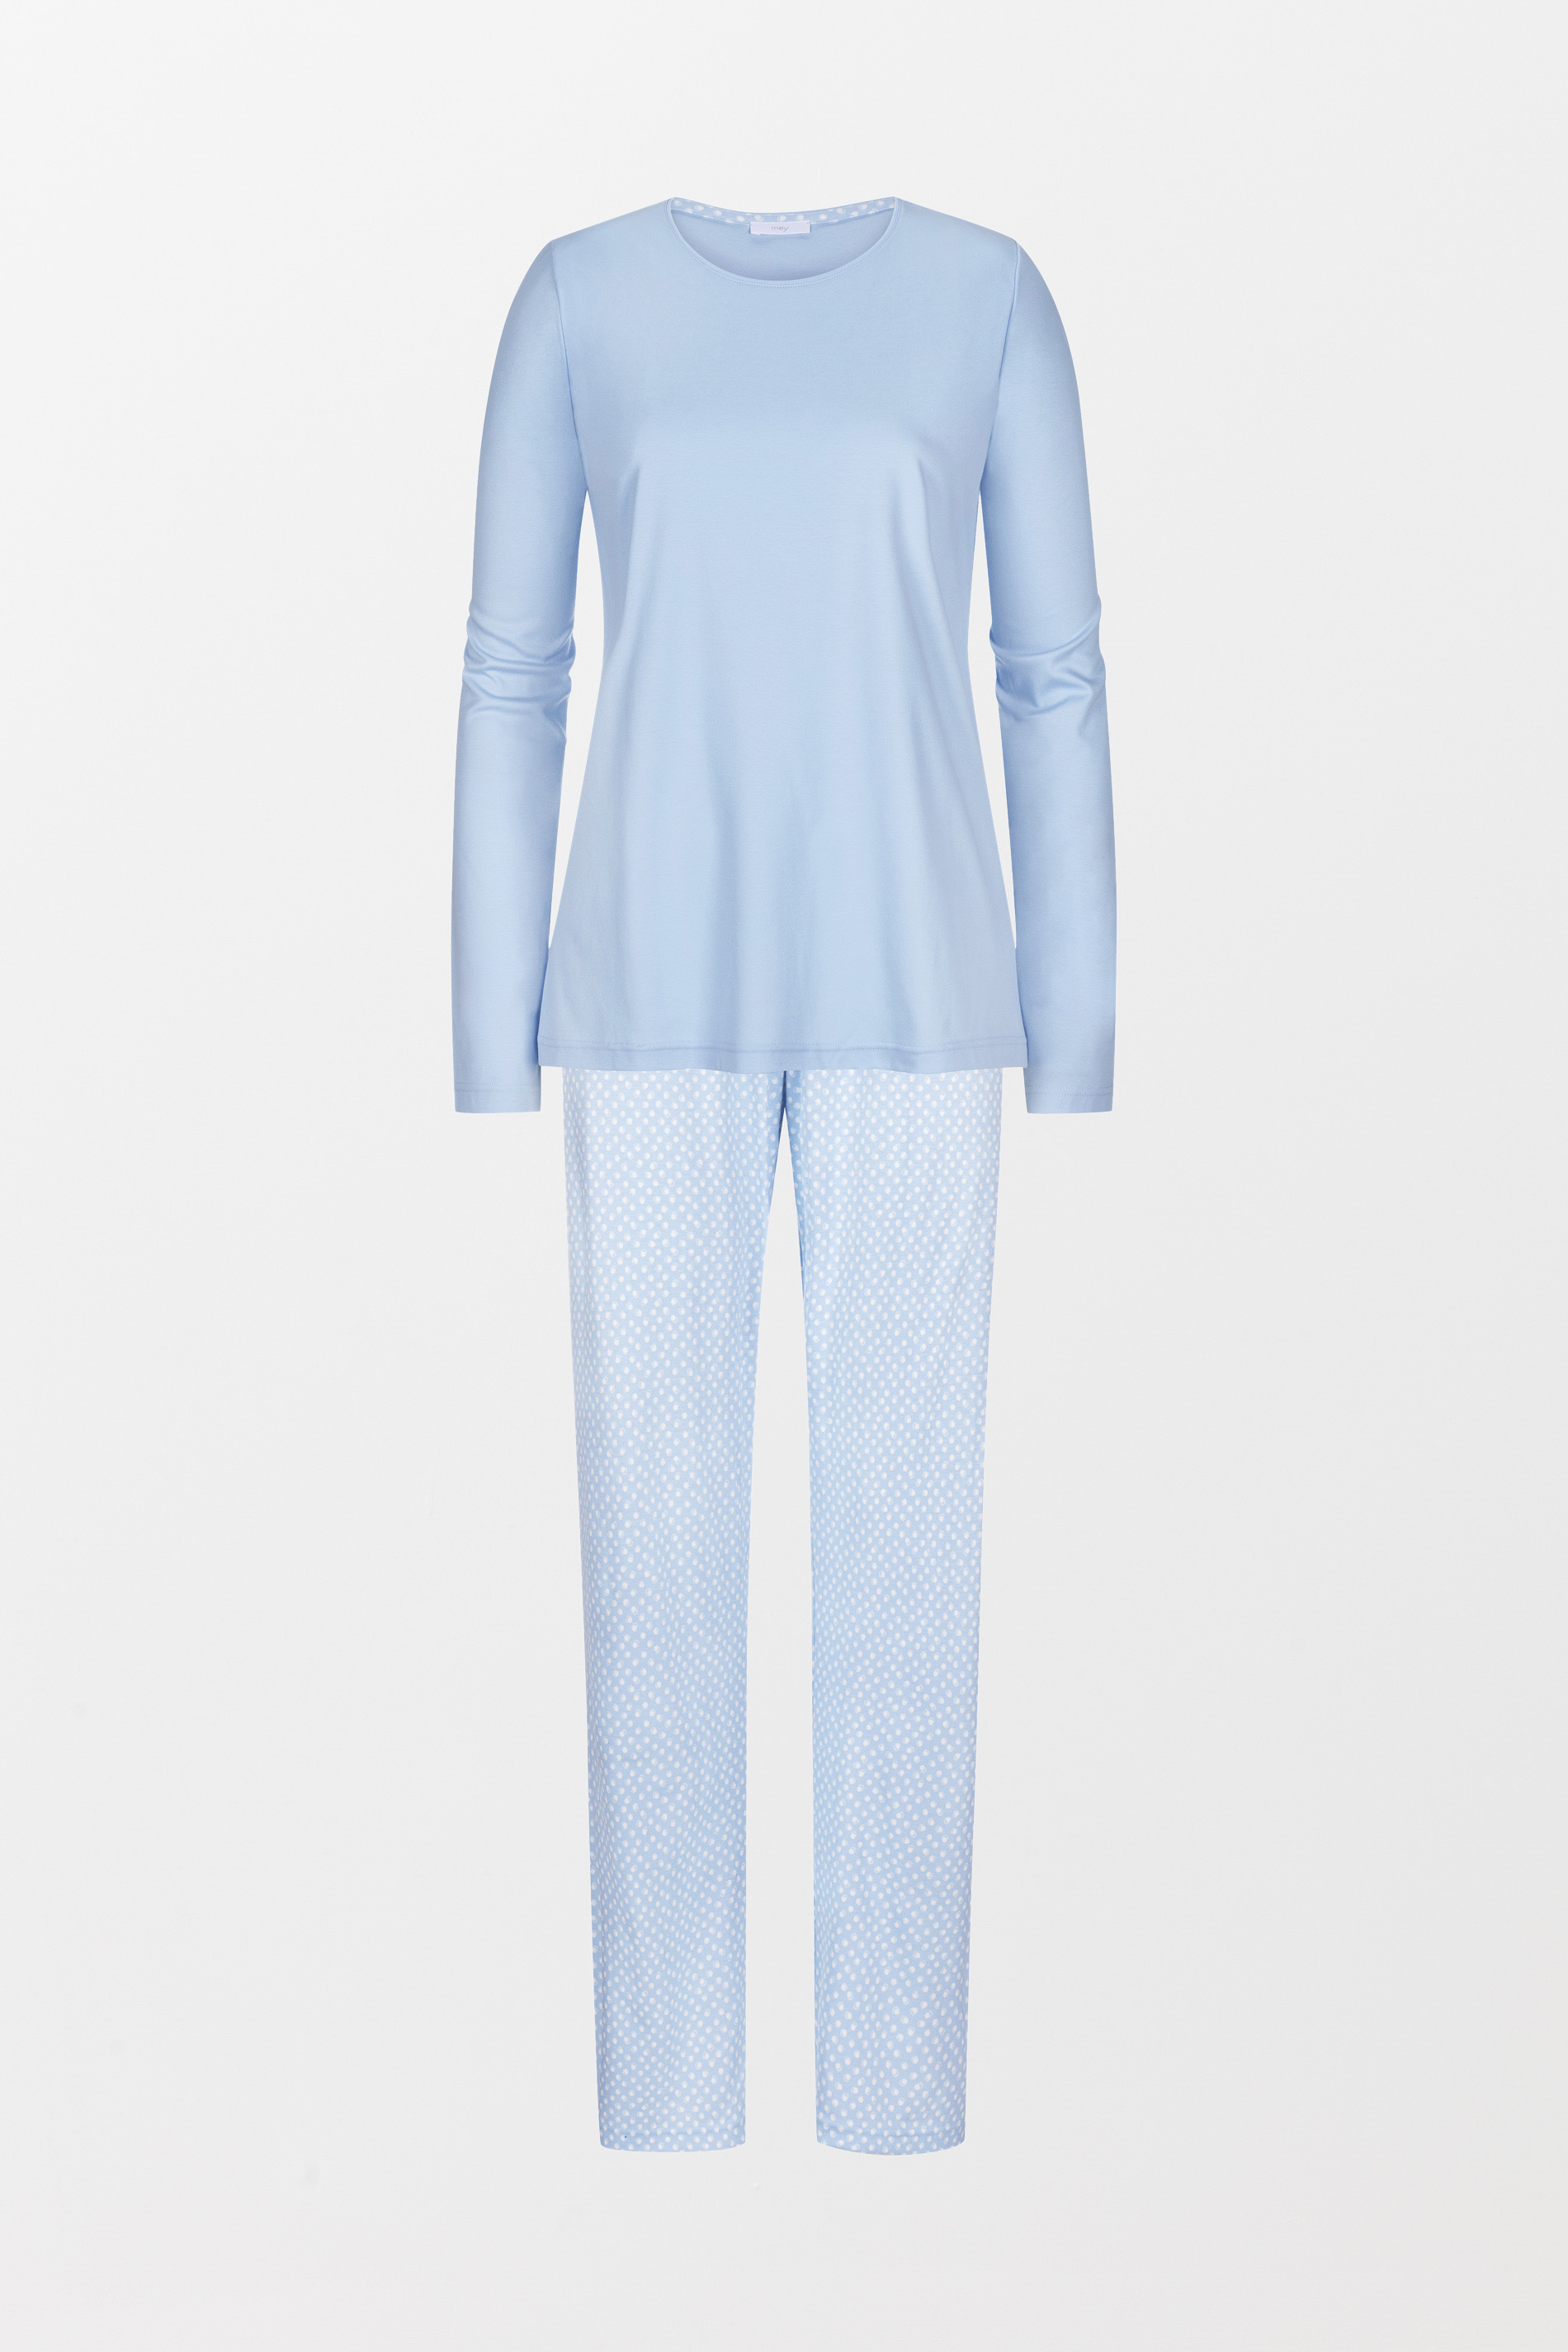 Pyjama Dream Blue Serie Emelie Uitknippen | mey®